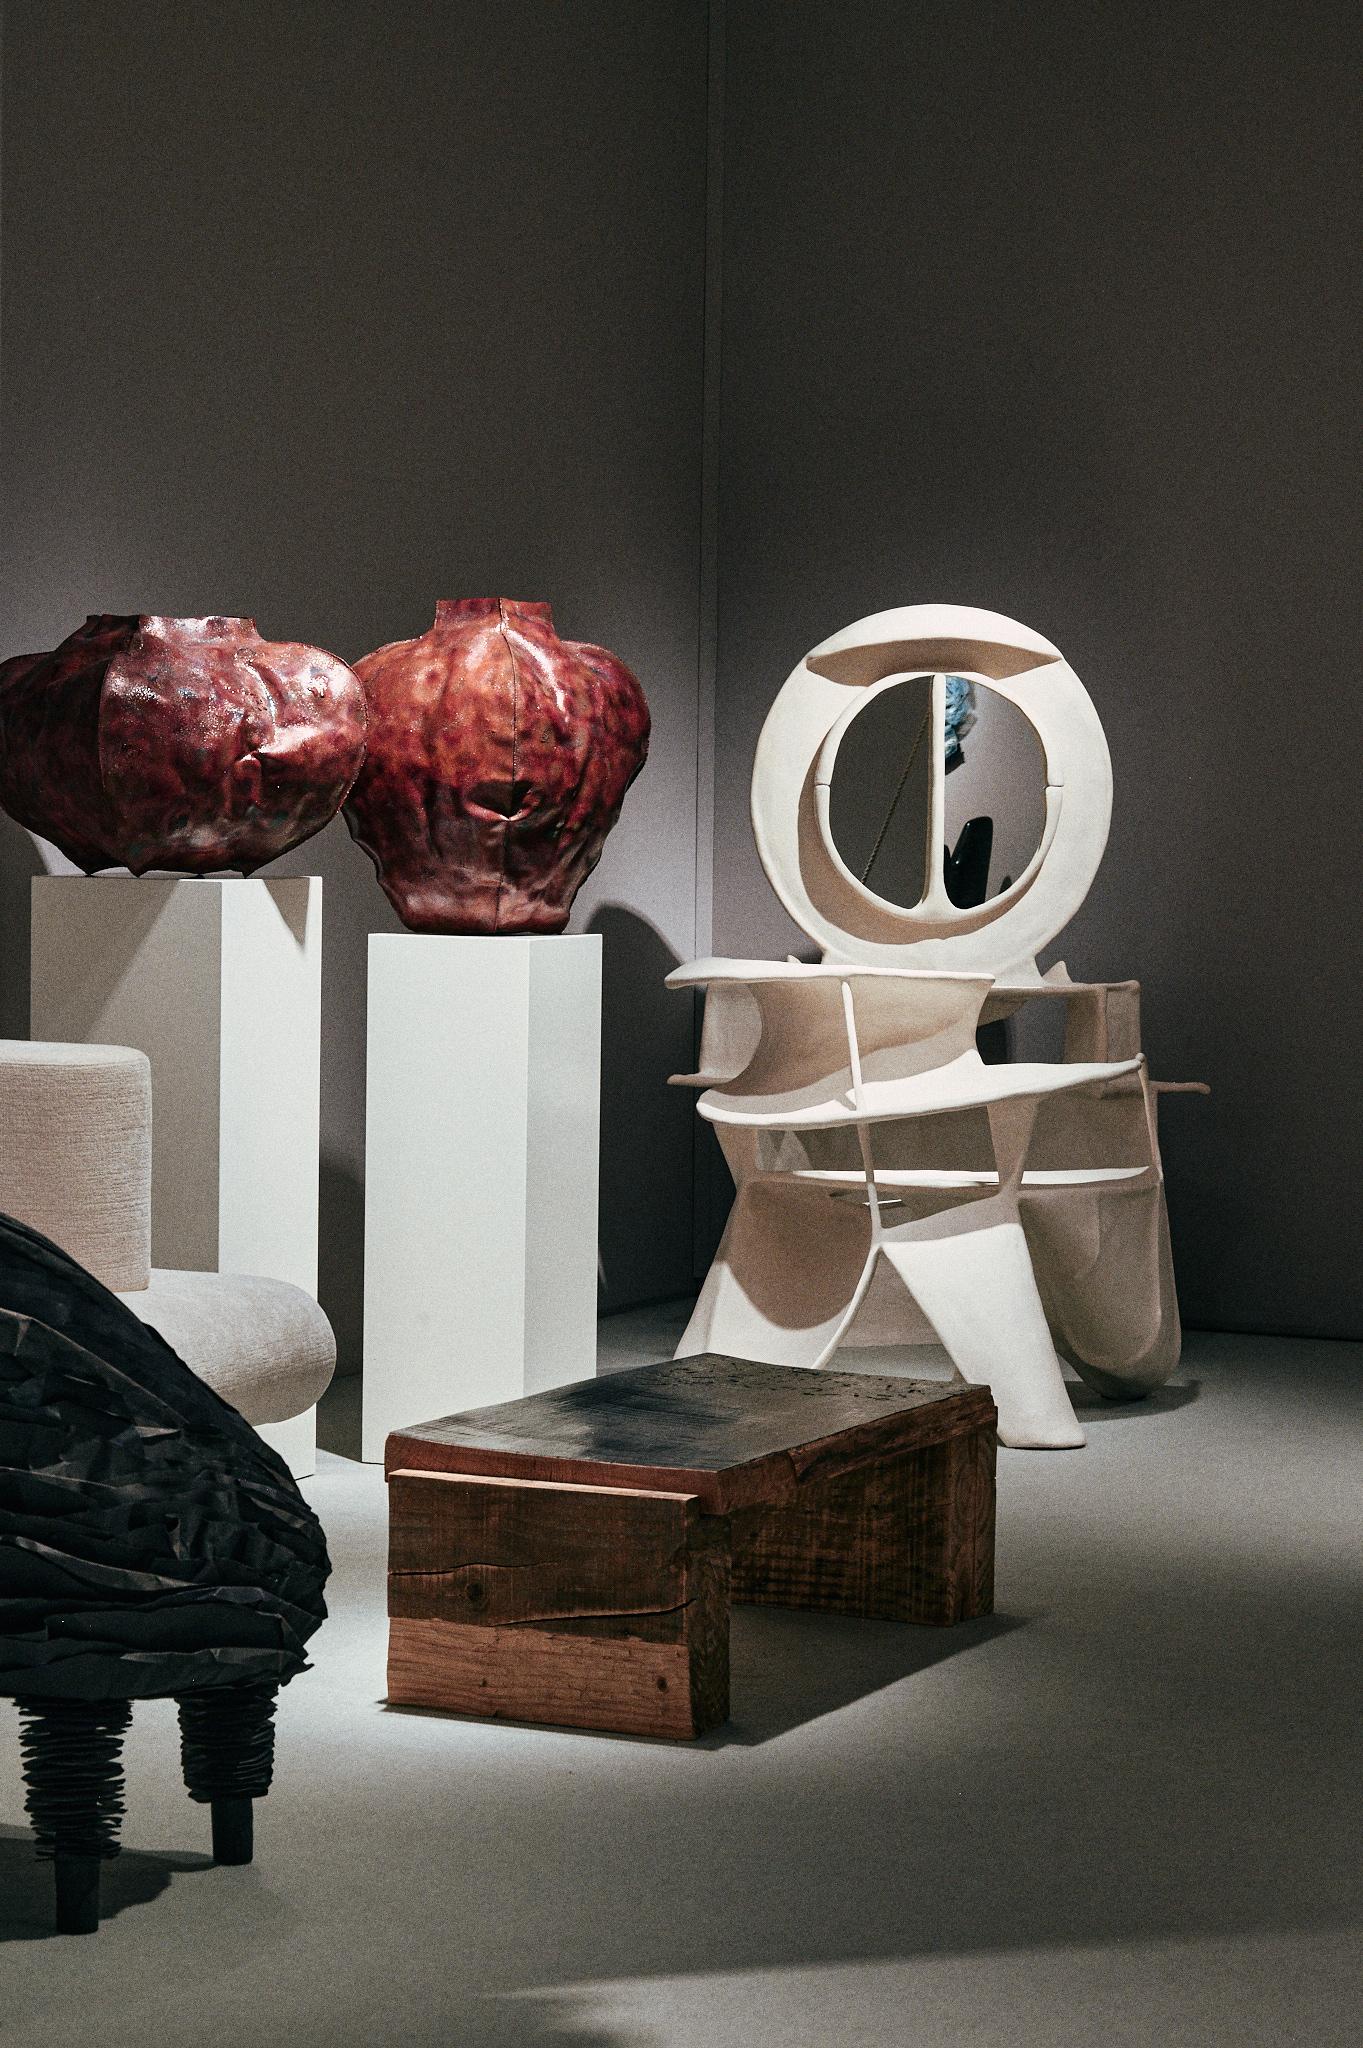 Dutch Contemporary Design Textured Curved Sculptures Coiffeuse by Jordan van der Ven For Sale